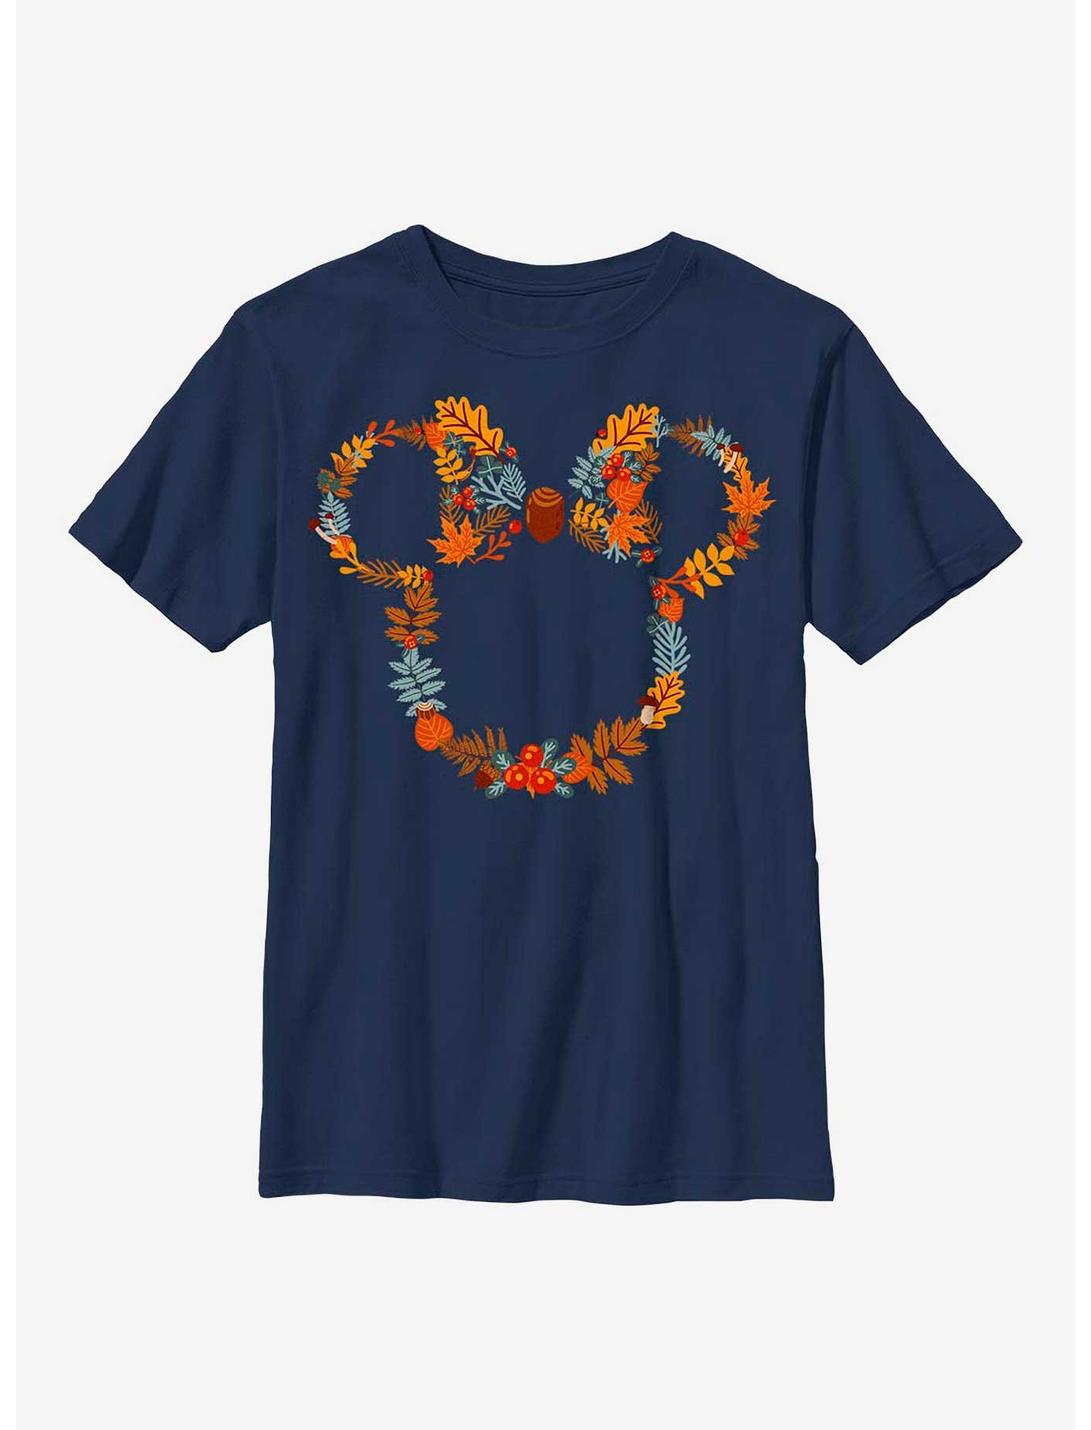 Disney Minnie Mouse Autumn Wreath Youth T-Shirt, NAVY, hi-res